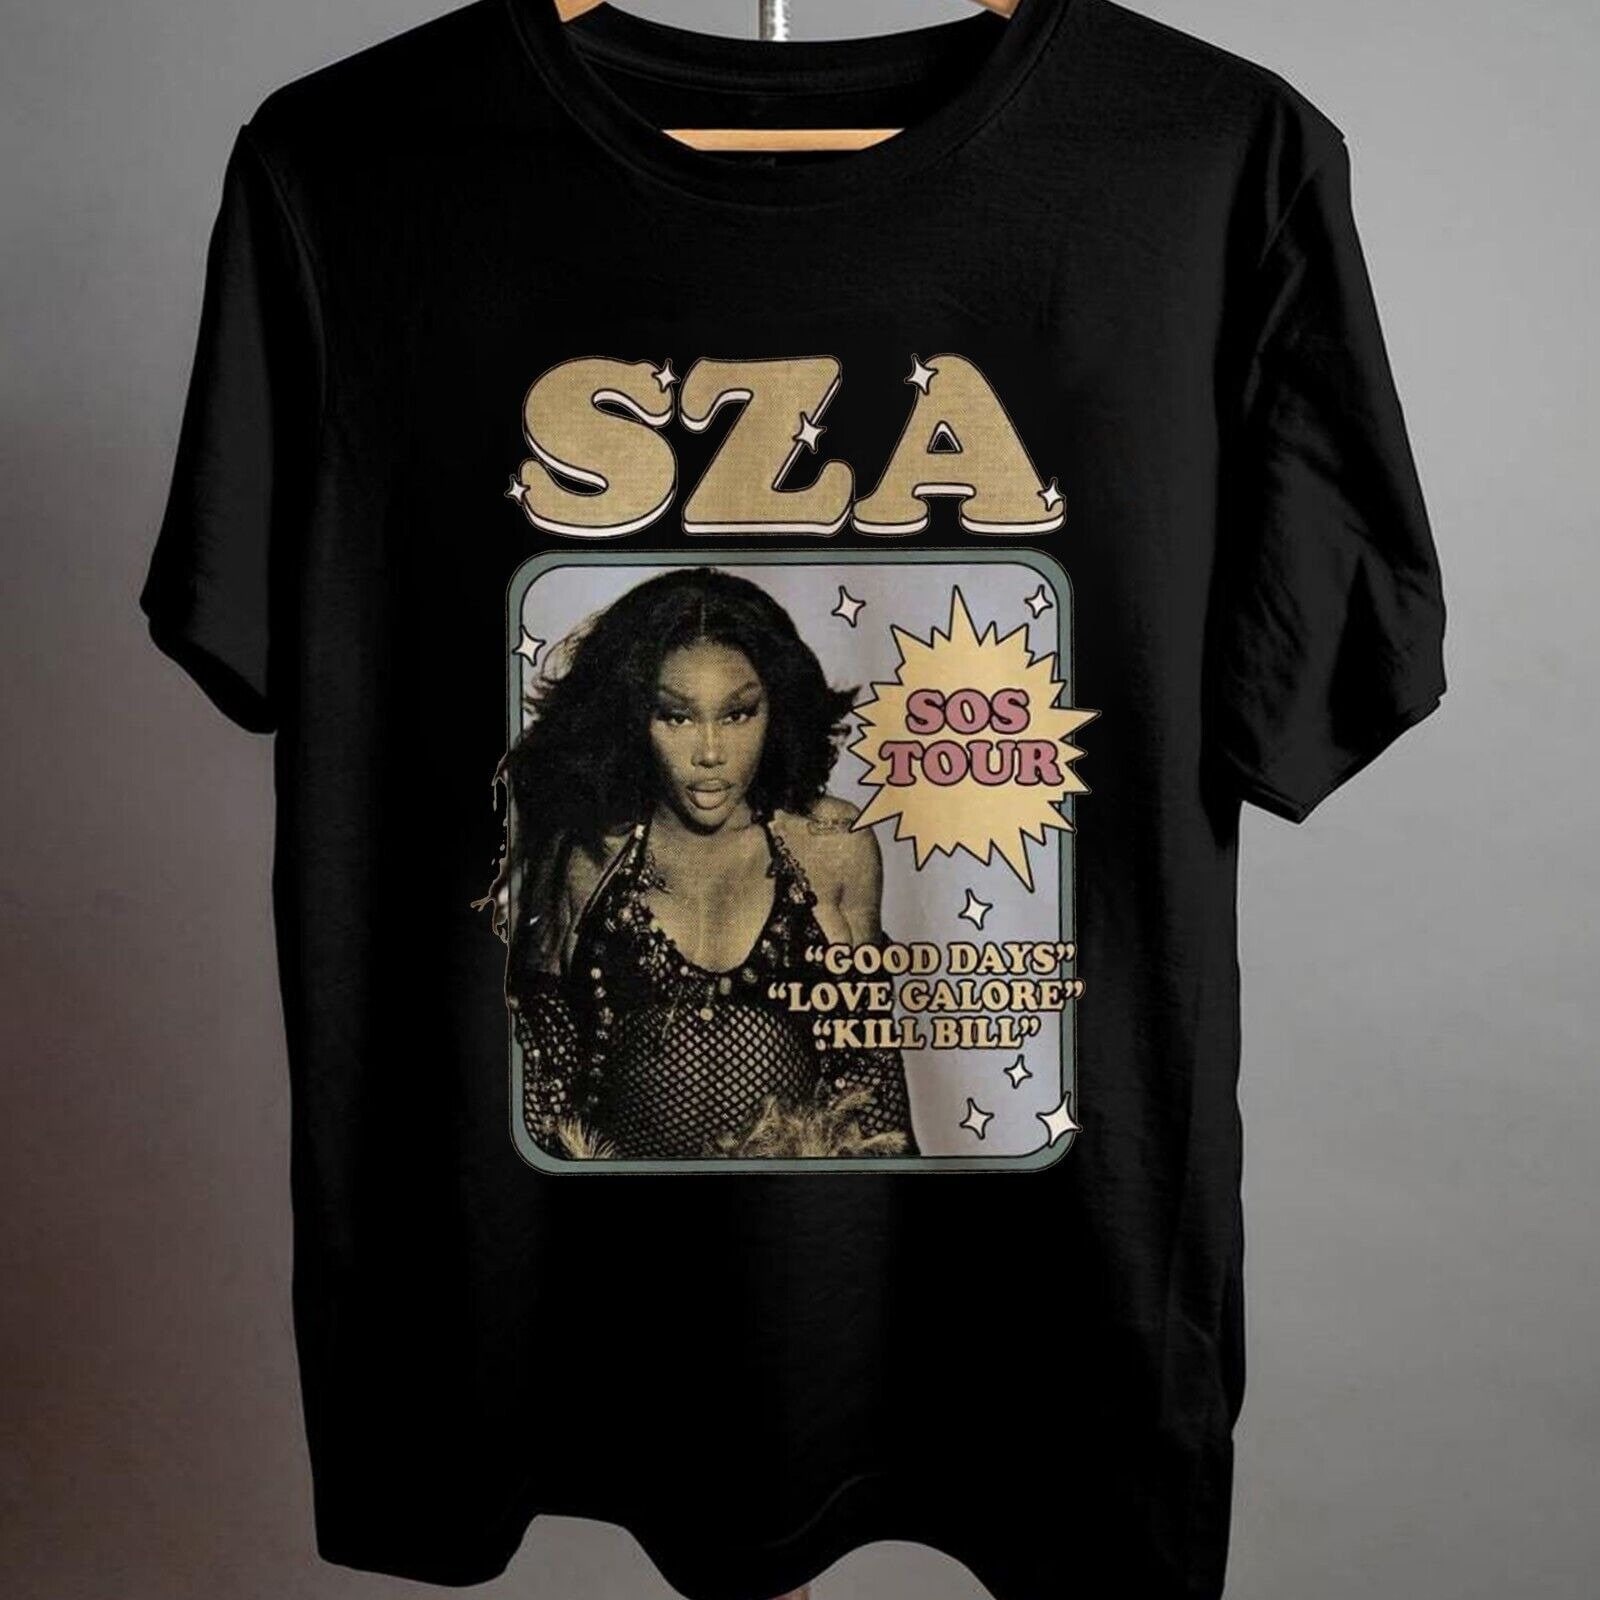 Discover Sza Vintage Shirt, Sza Music RnB Singer Rapper Shirt